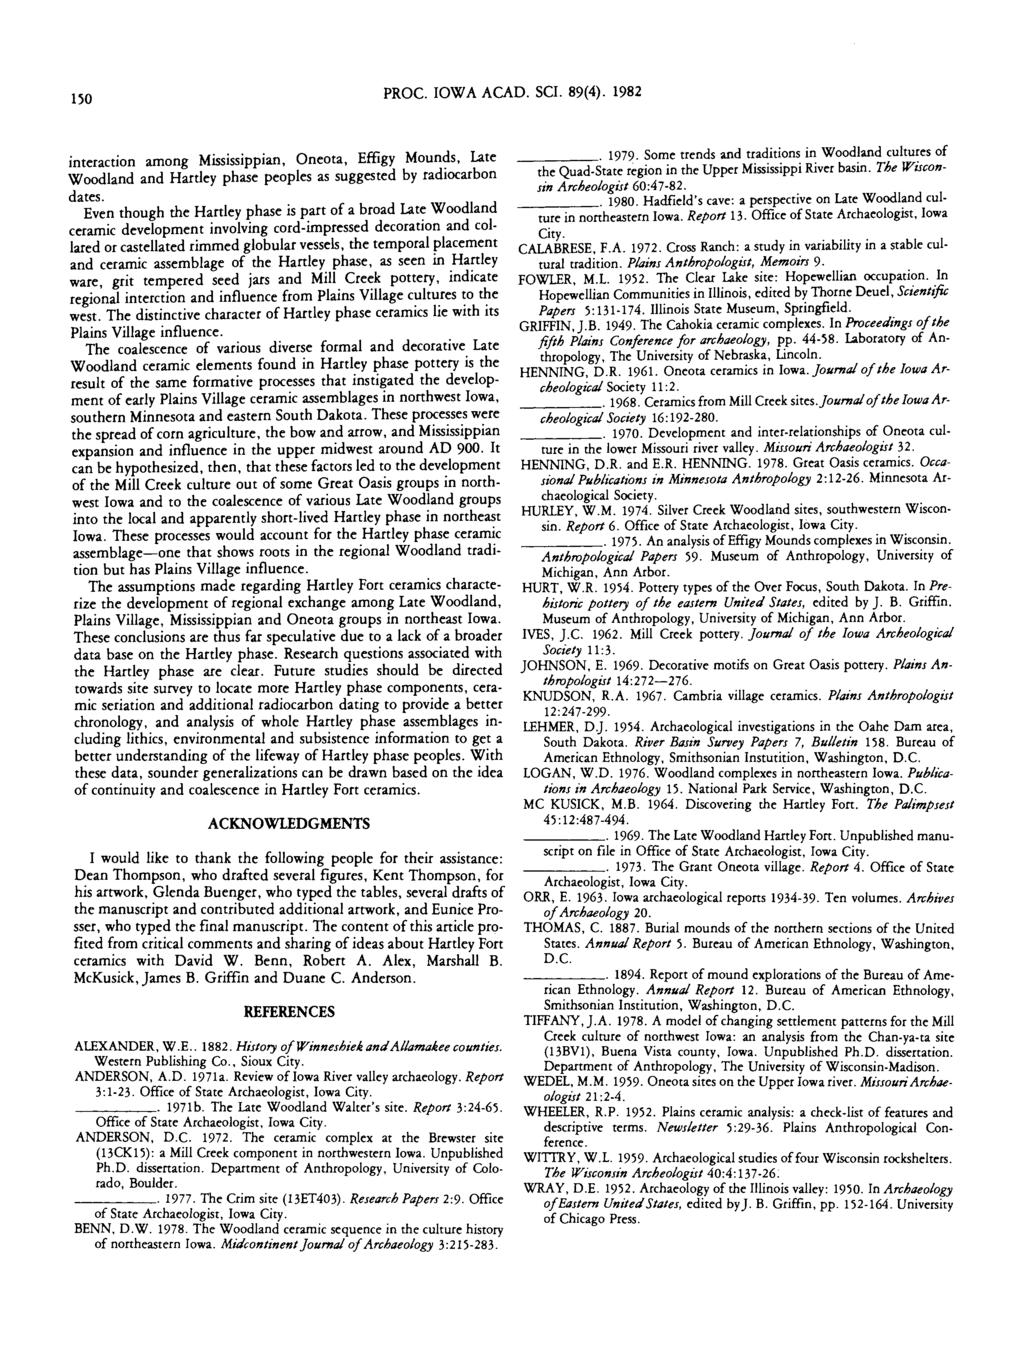 Proceedings of the Iowa Academy of Science, Vol. 89 [1982], No. 4, Art. 3 150 PROC. IOWA ACAD. SCI. 89(4).